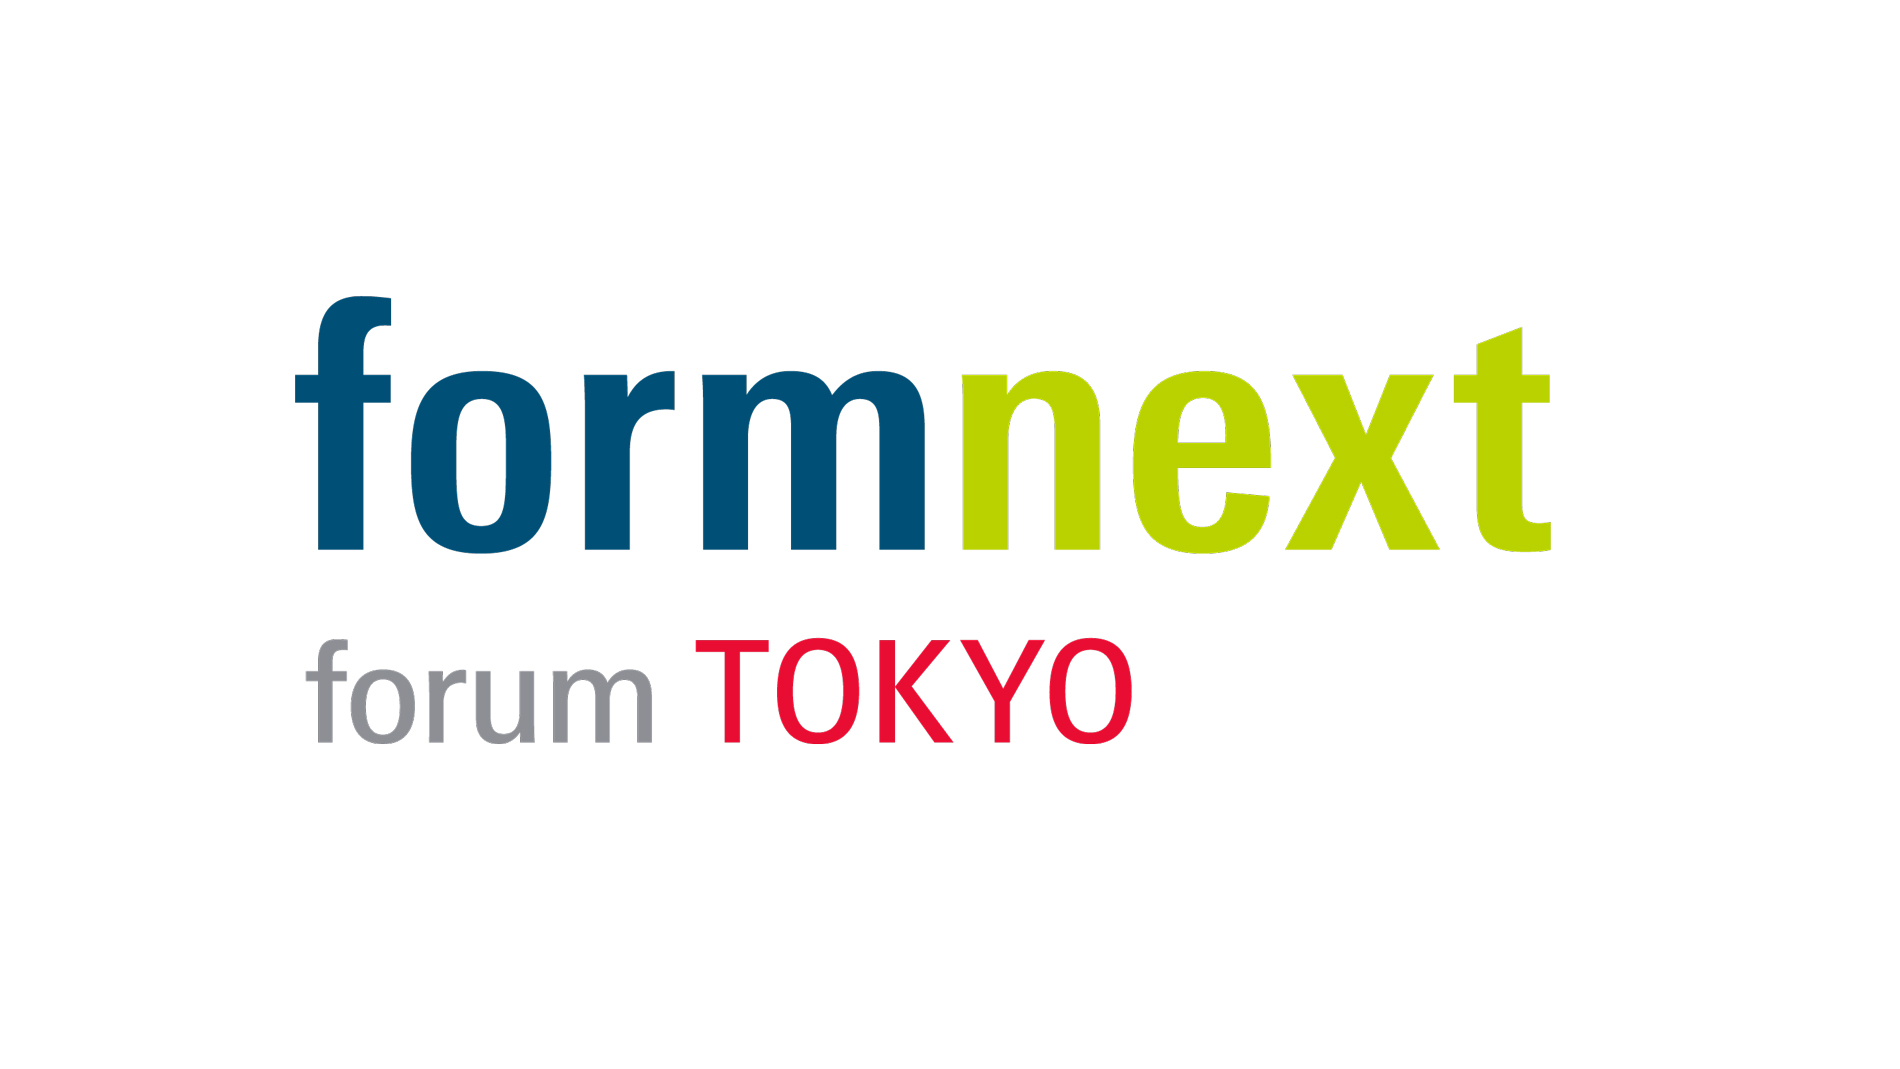 Formnext Forum Tokyo/Japan